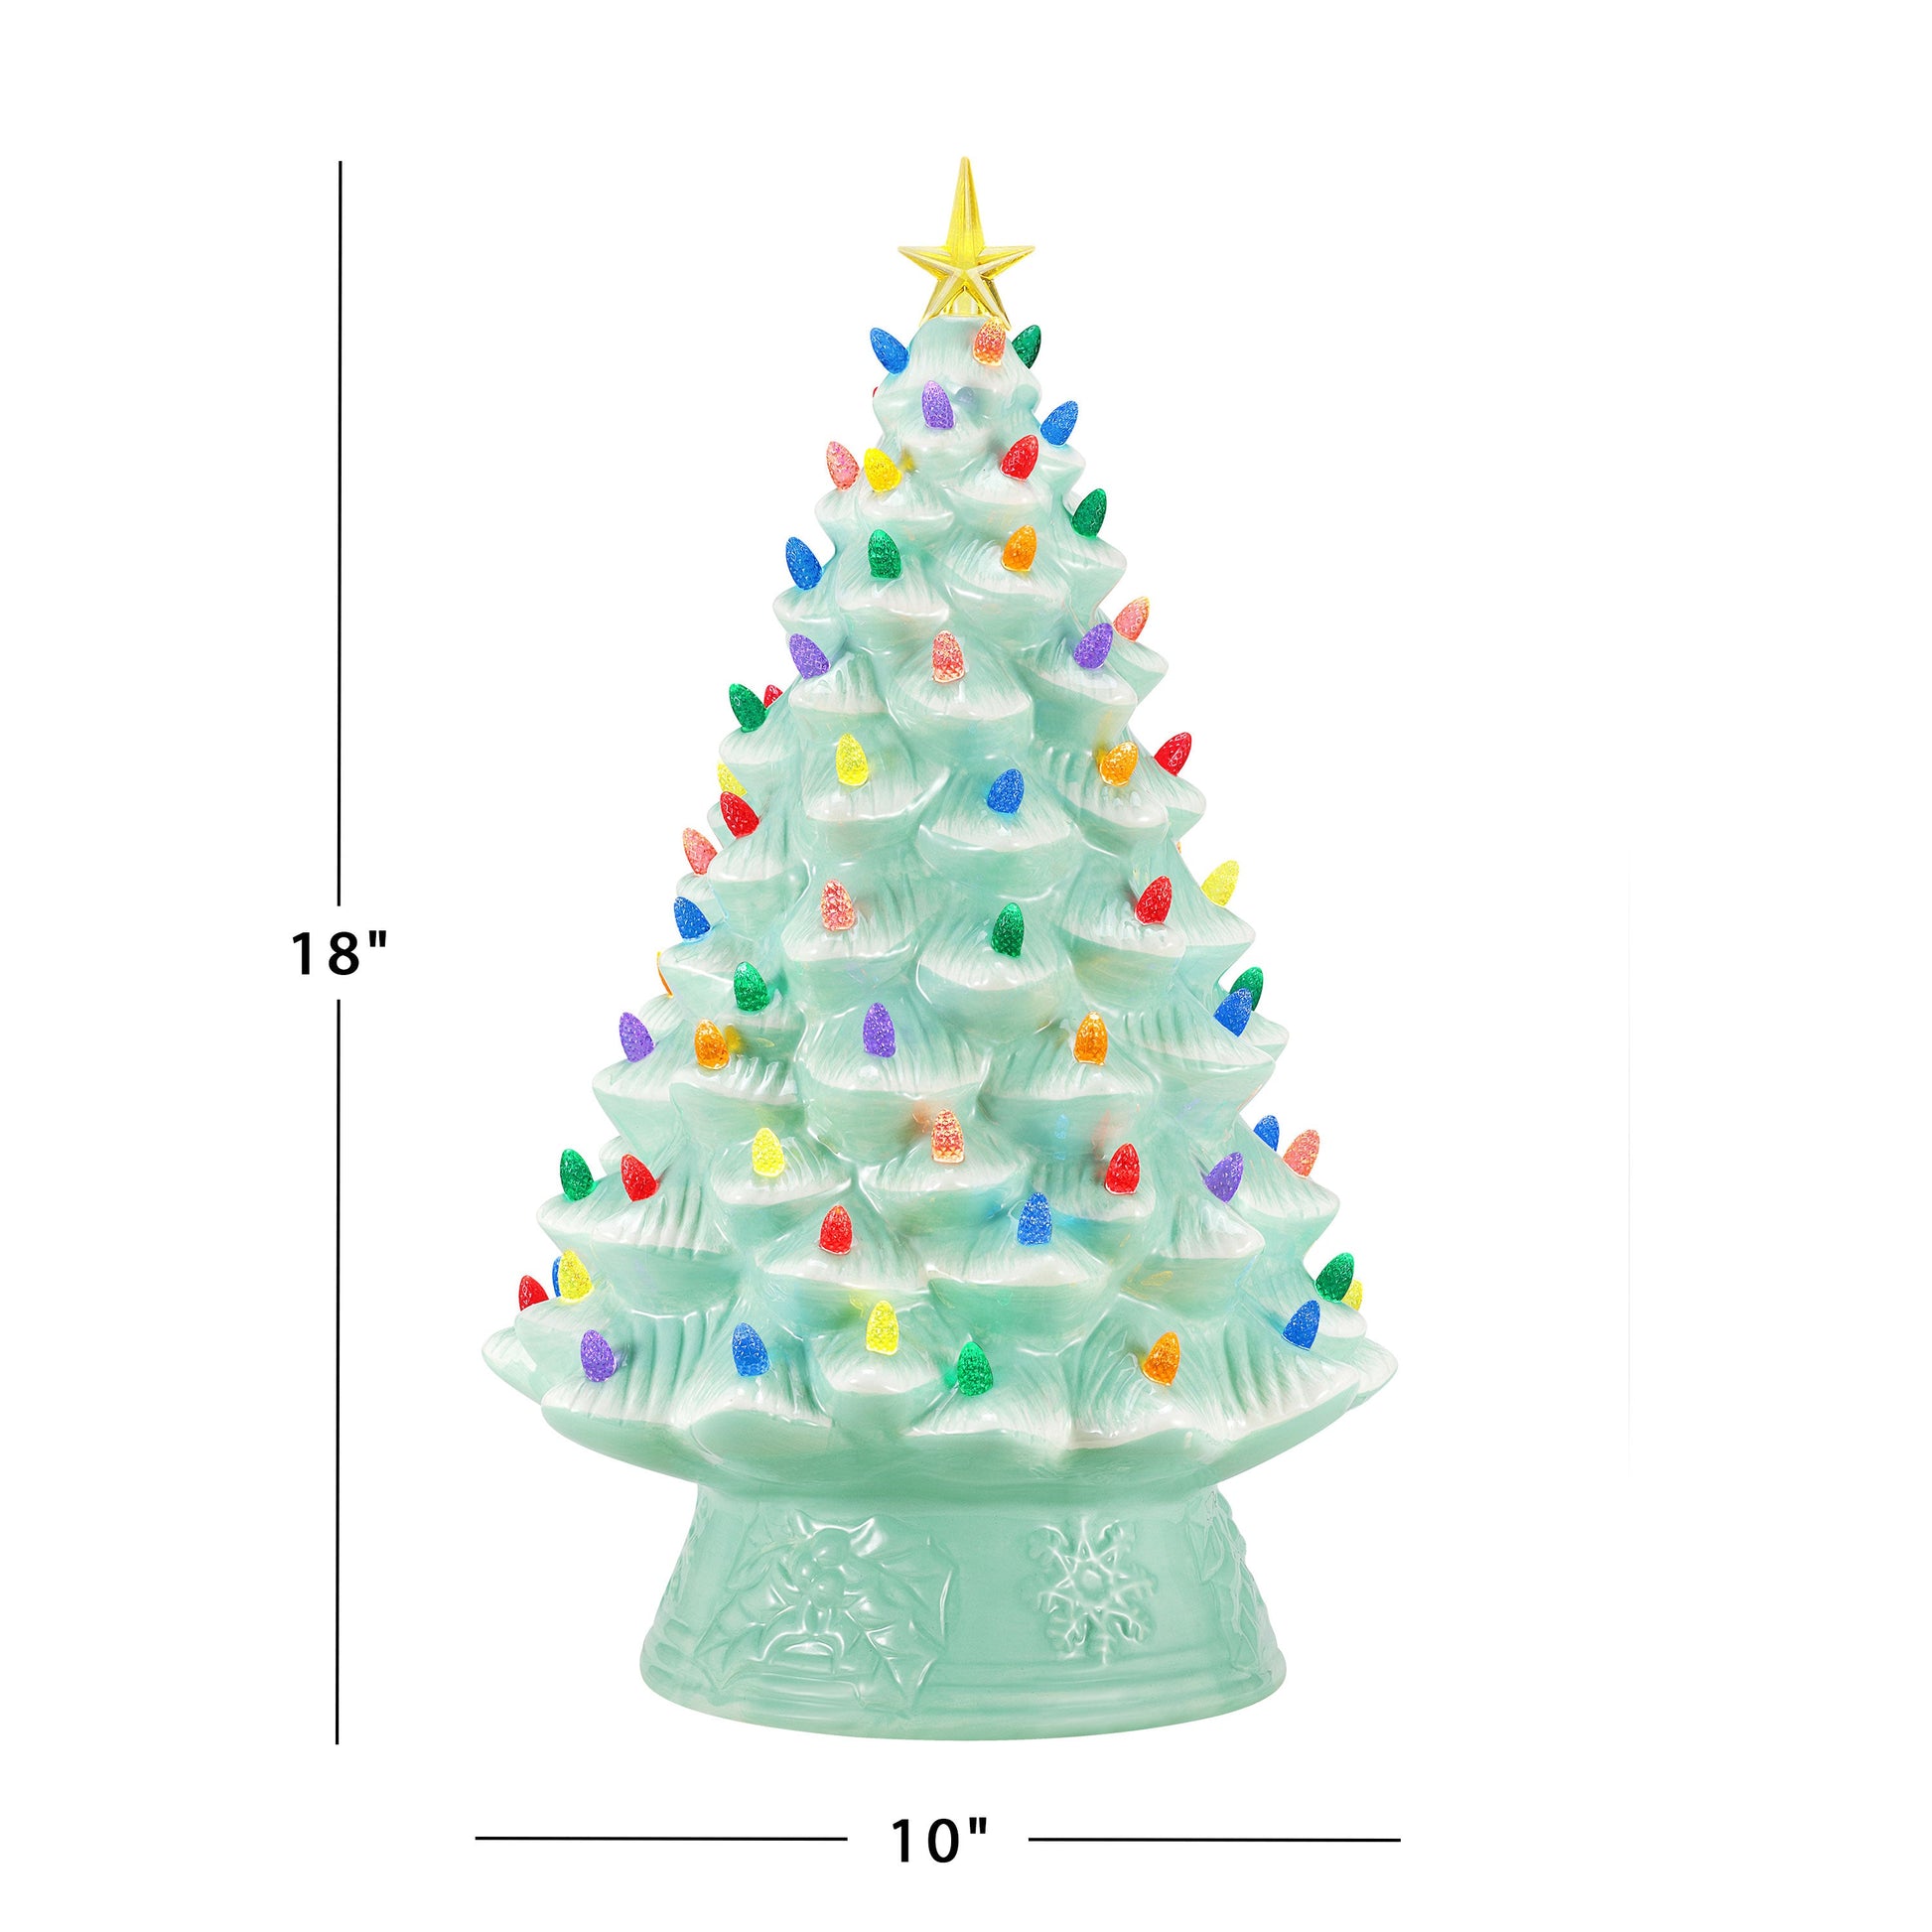 18" Nostalgic Ceramic Tree - Seafoam - Mr. Christmas